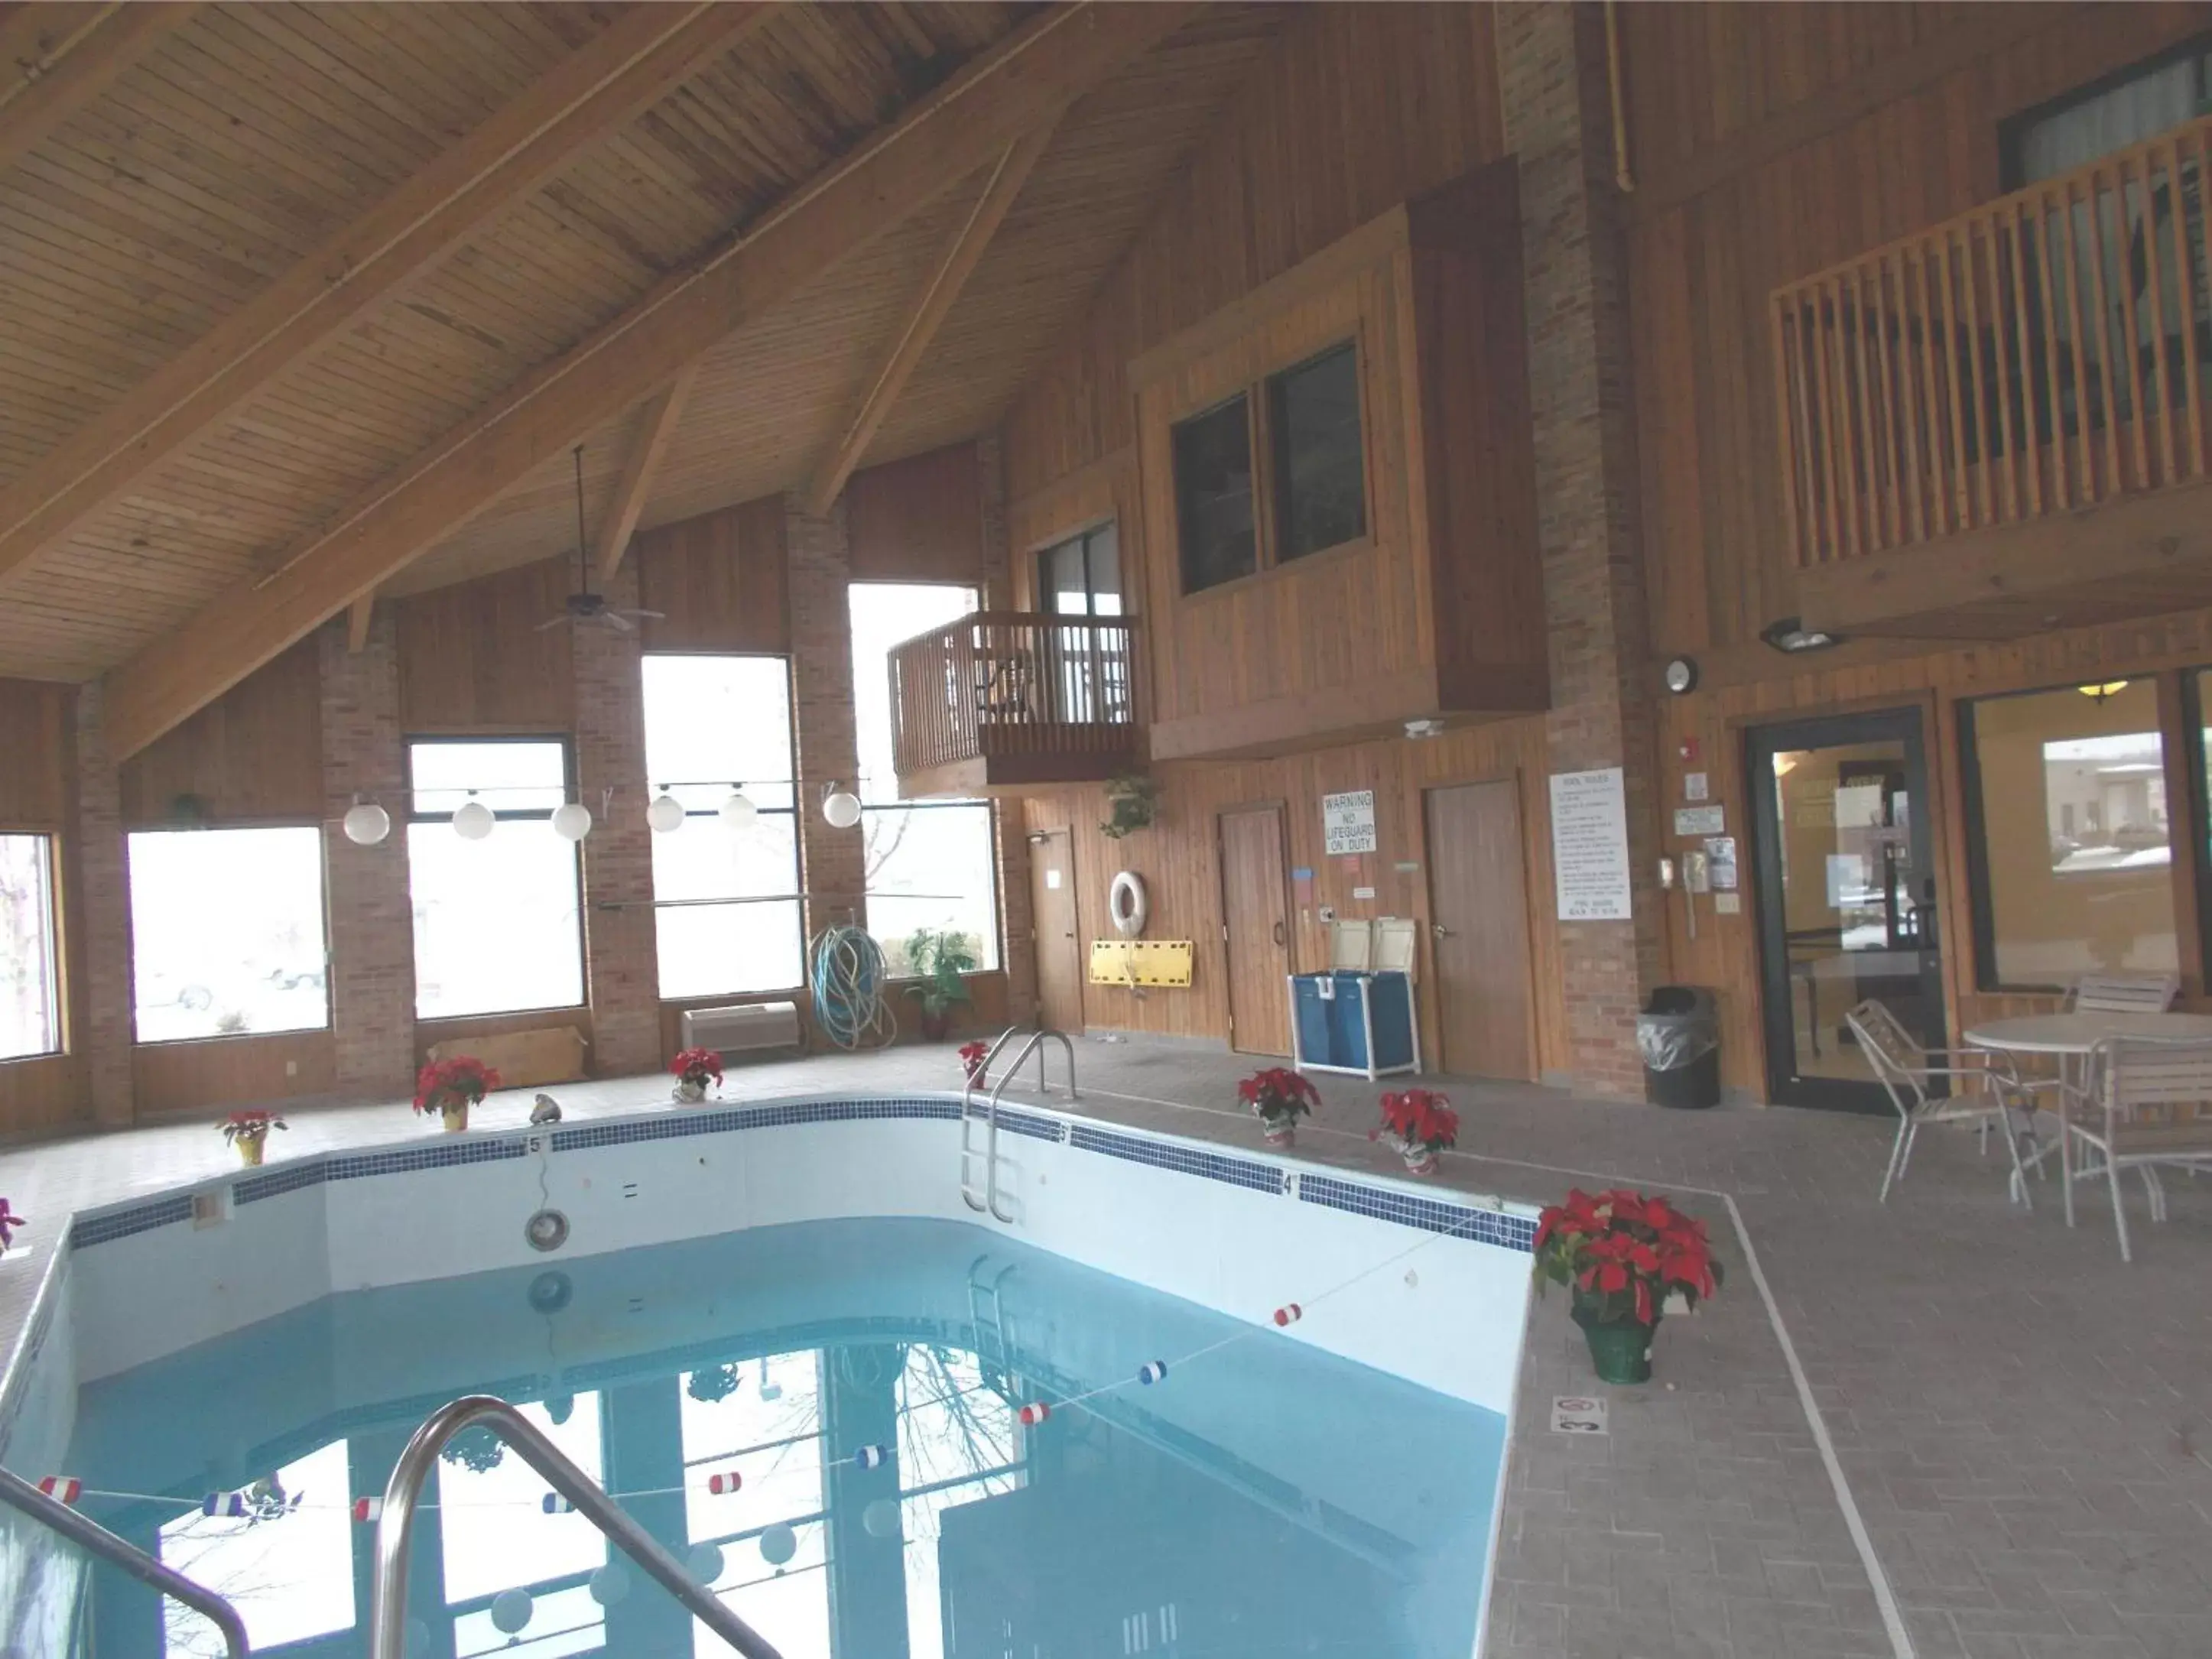 Swimming Pool in Royalton Inn and Suites, Wilmington,Ohio